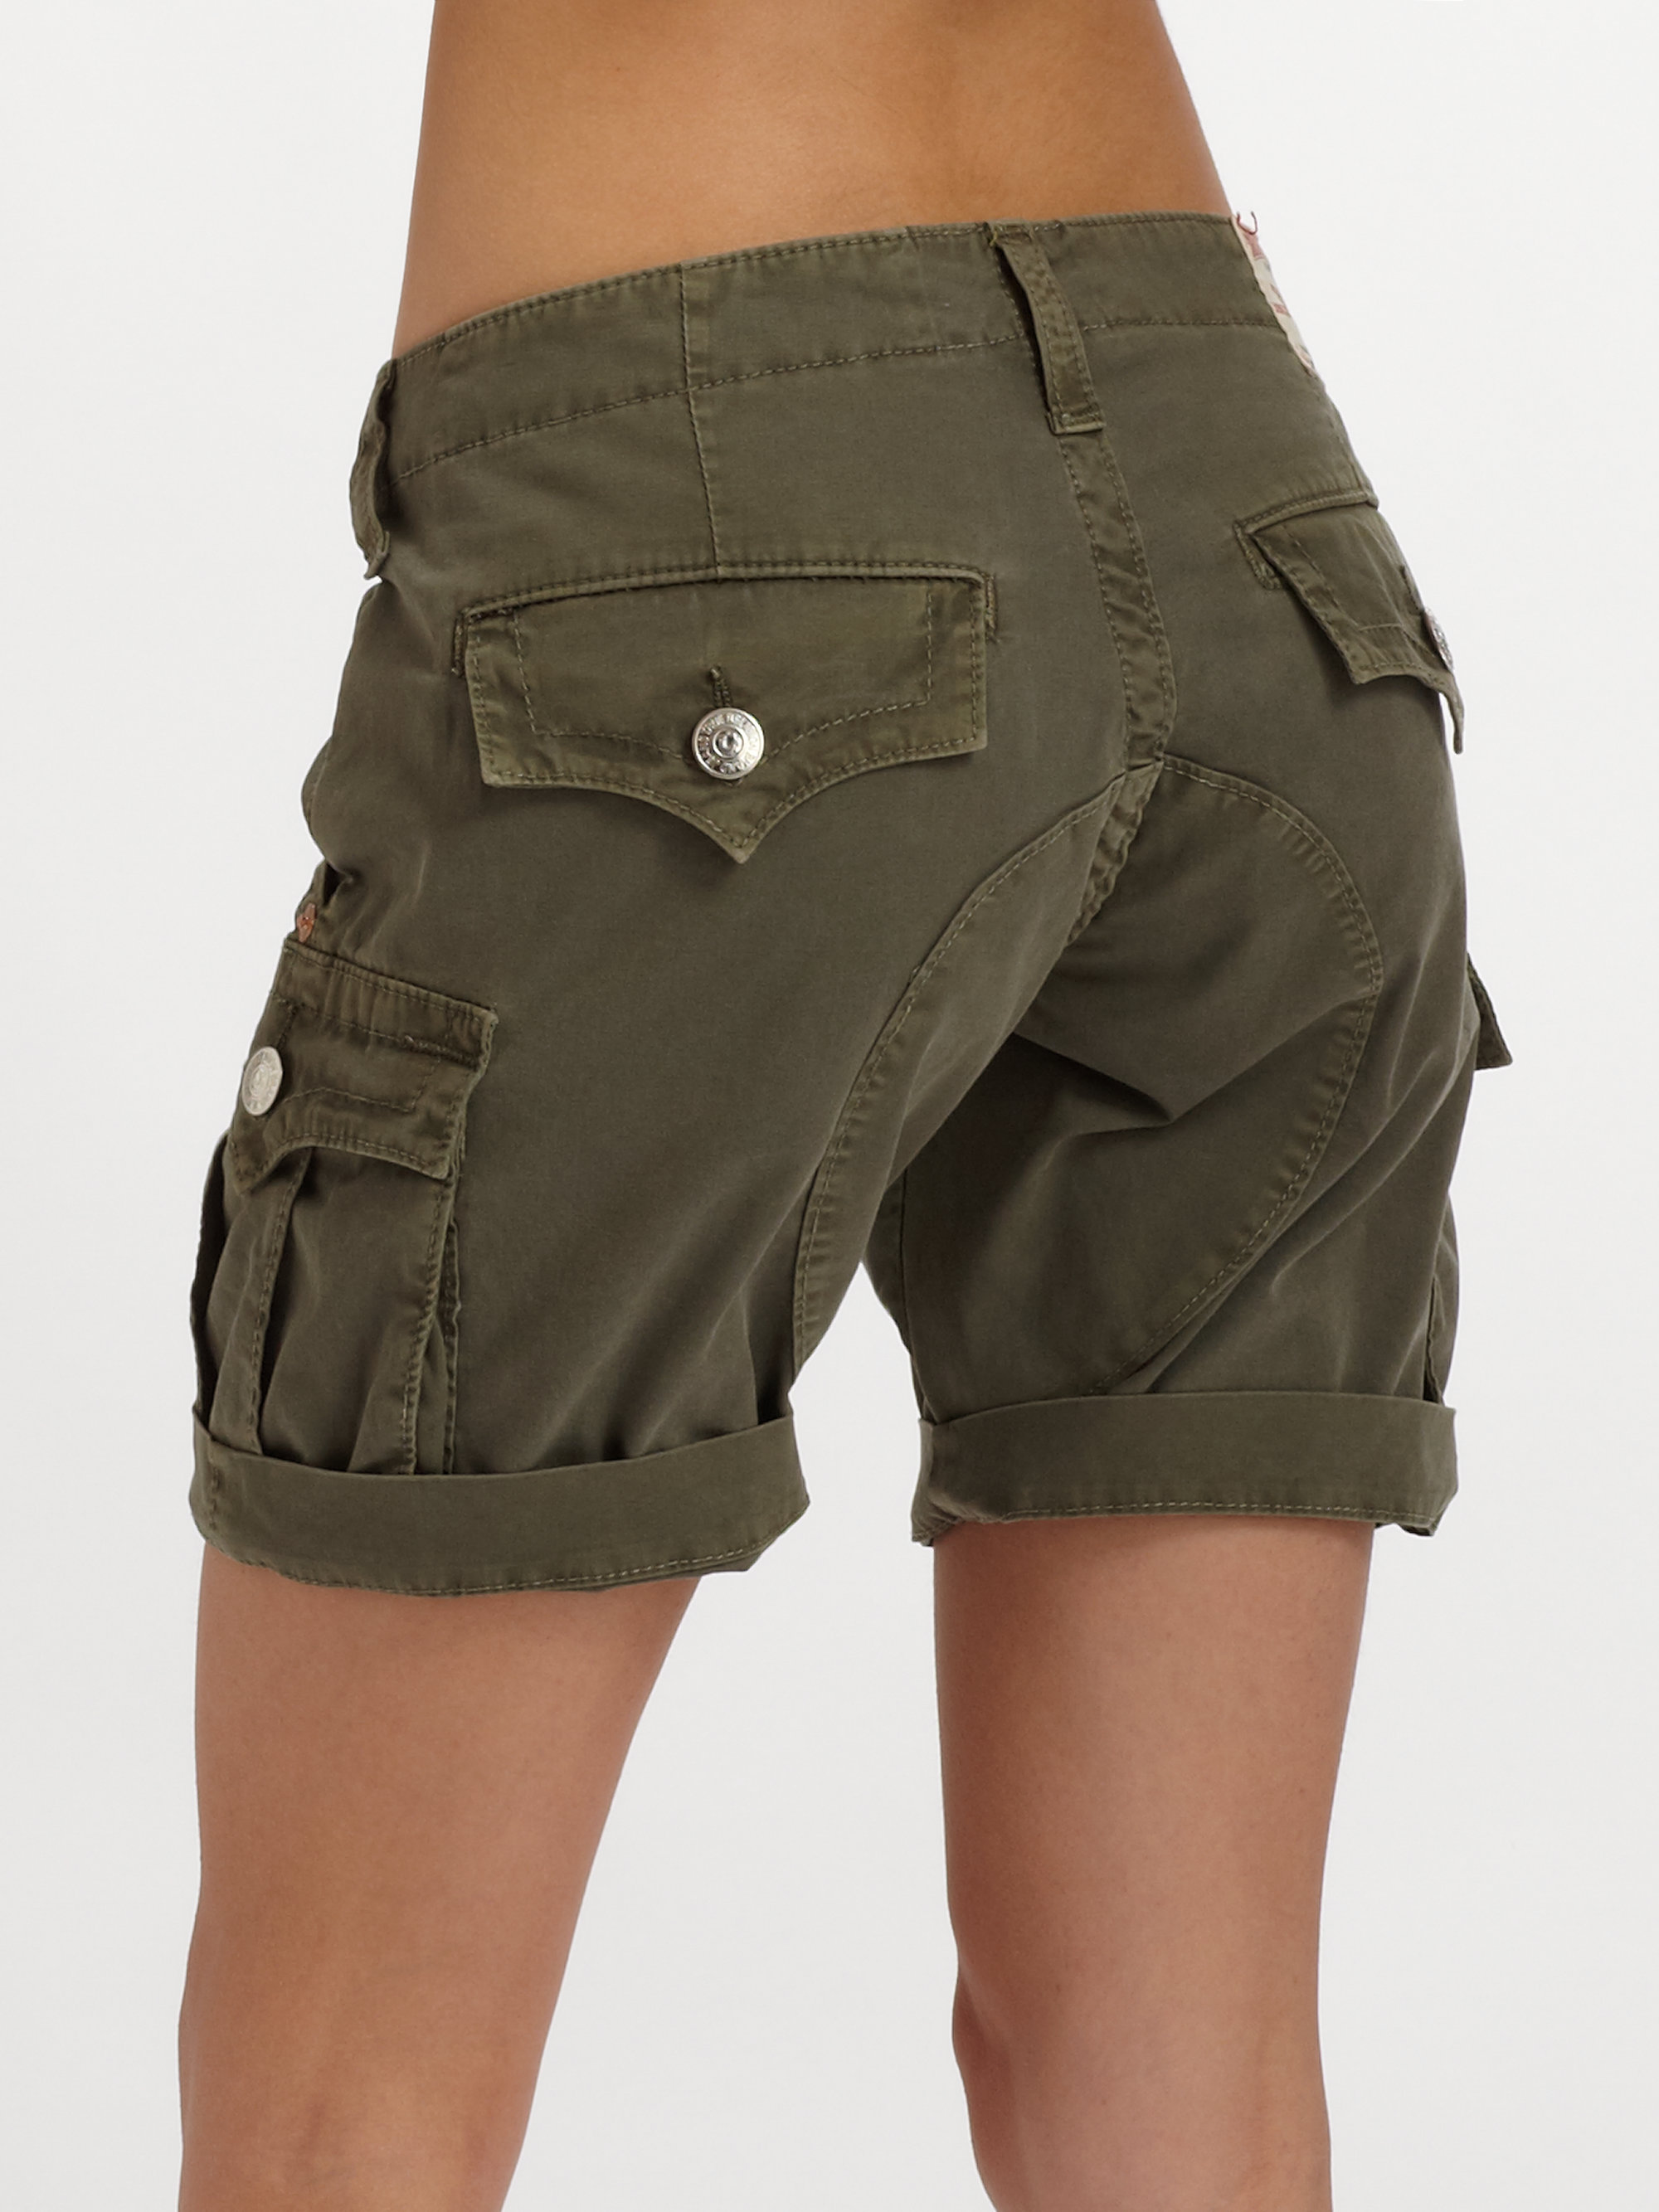 Best Green Cargo Shorts For Women